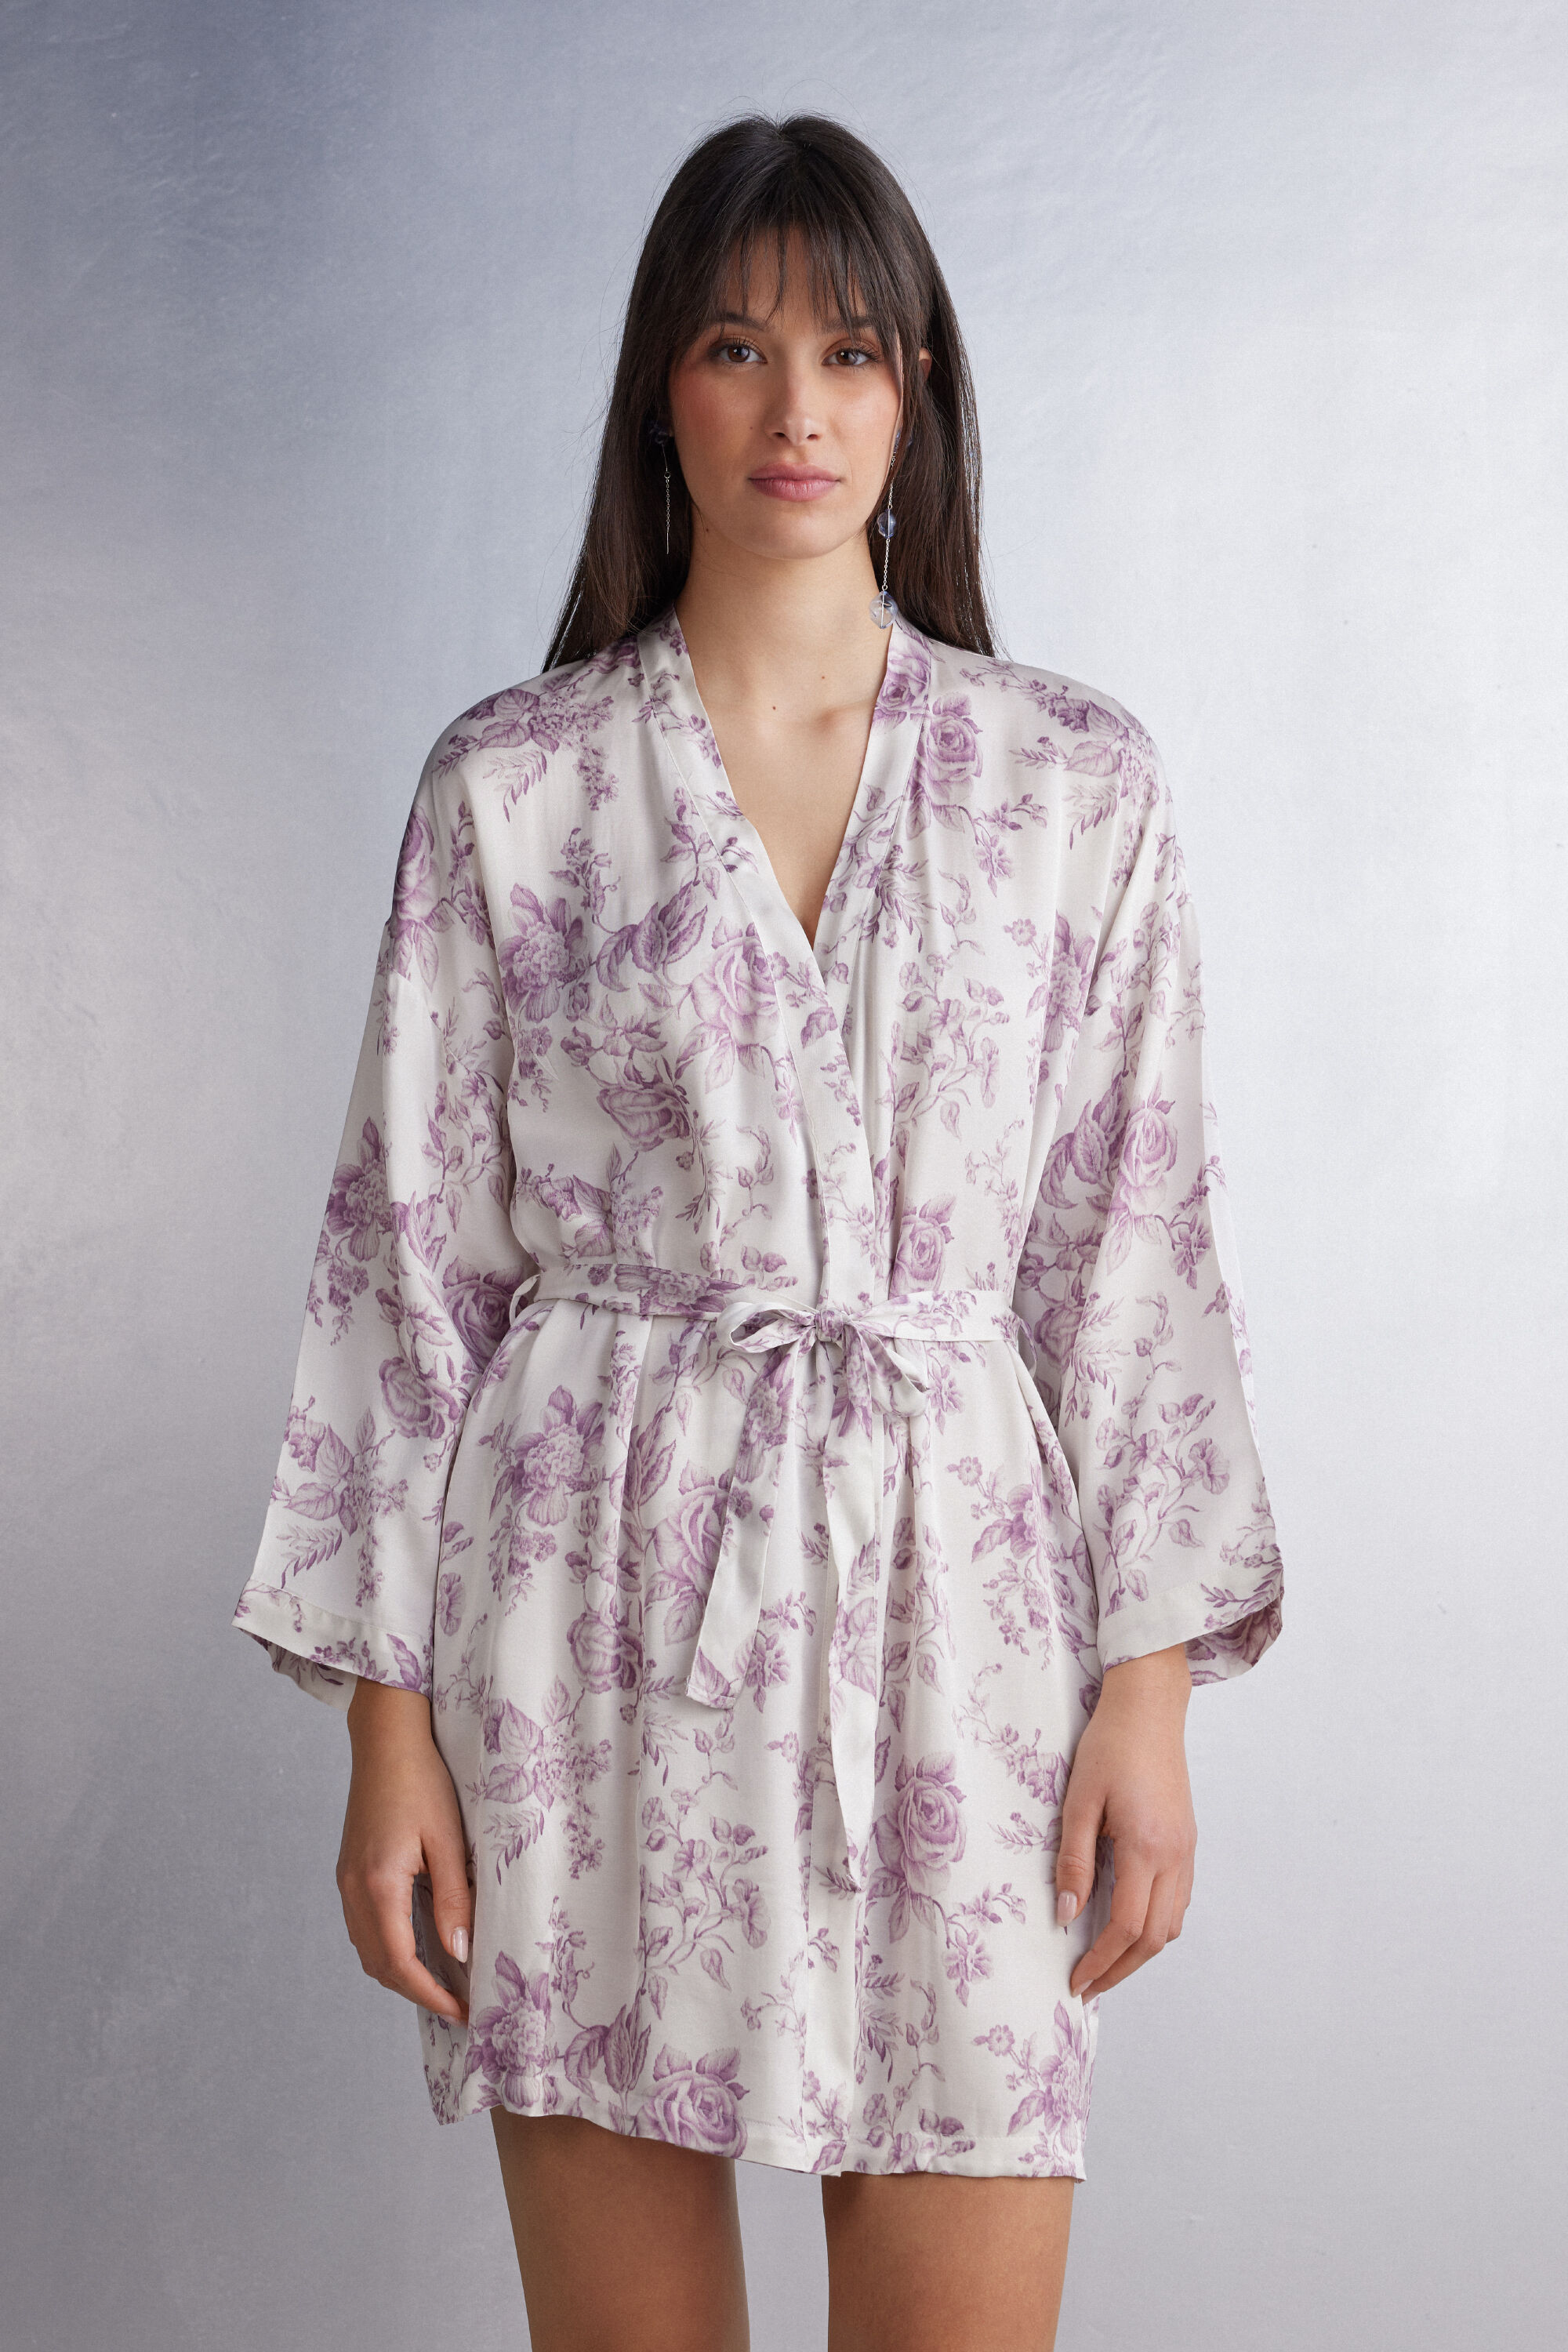 Intimissimi Graceful Simplicity Satin Kimono Woman Print Size M/L